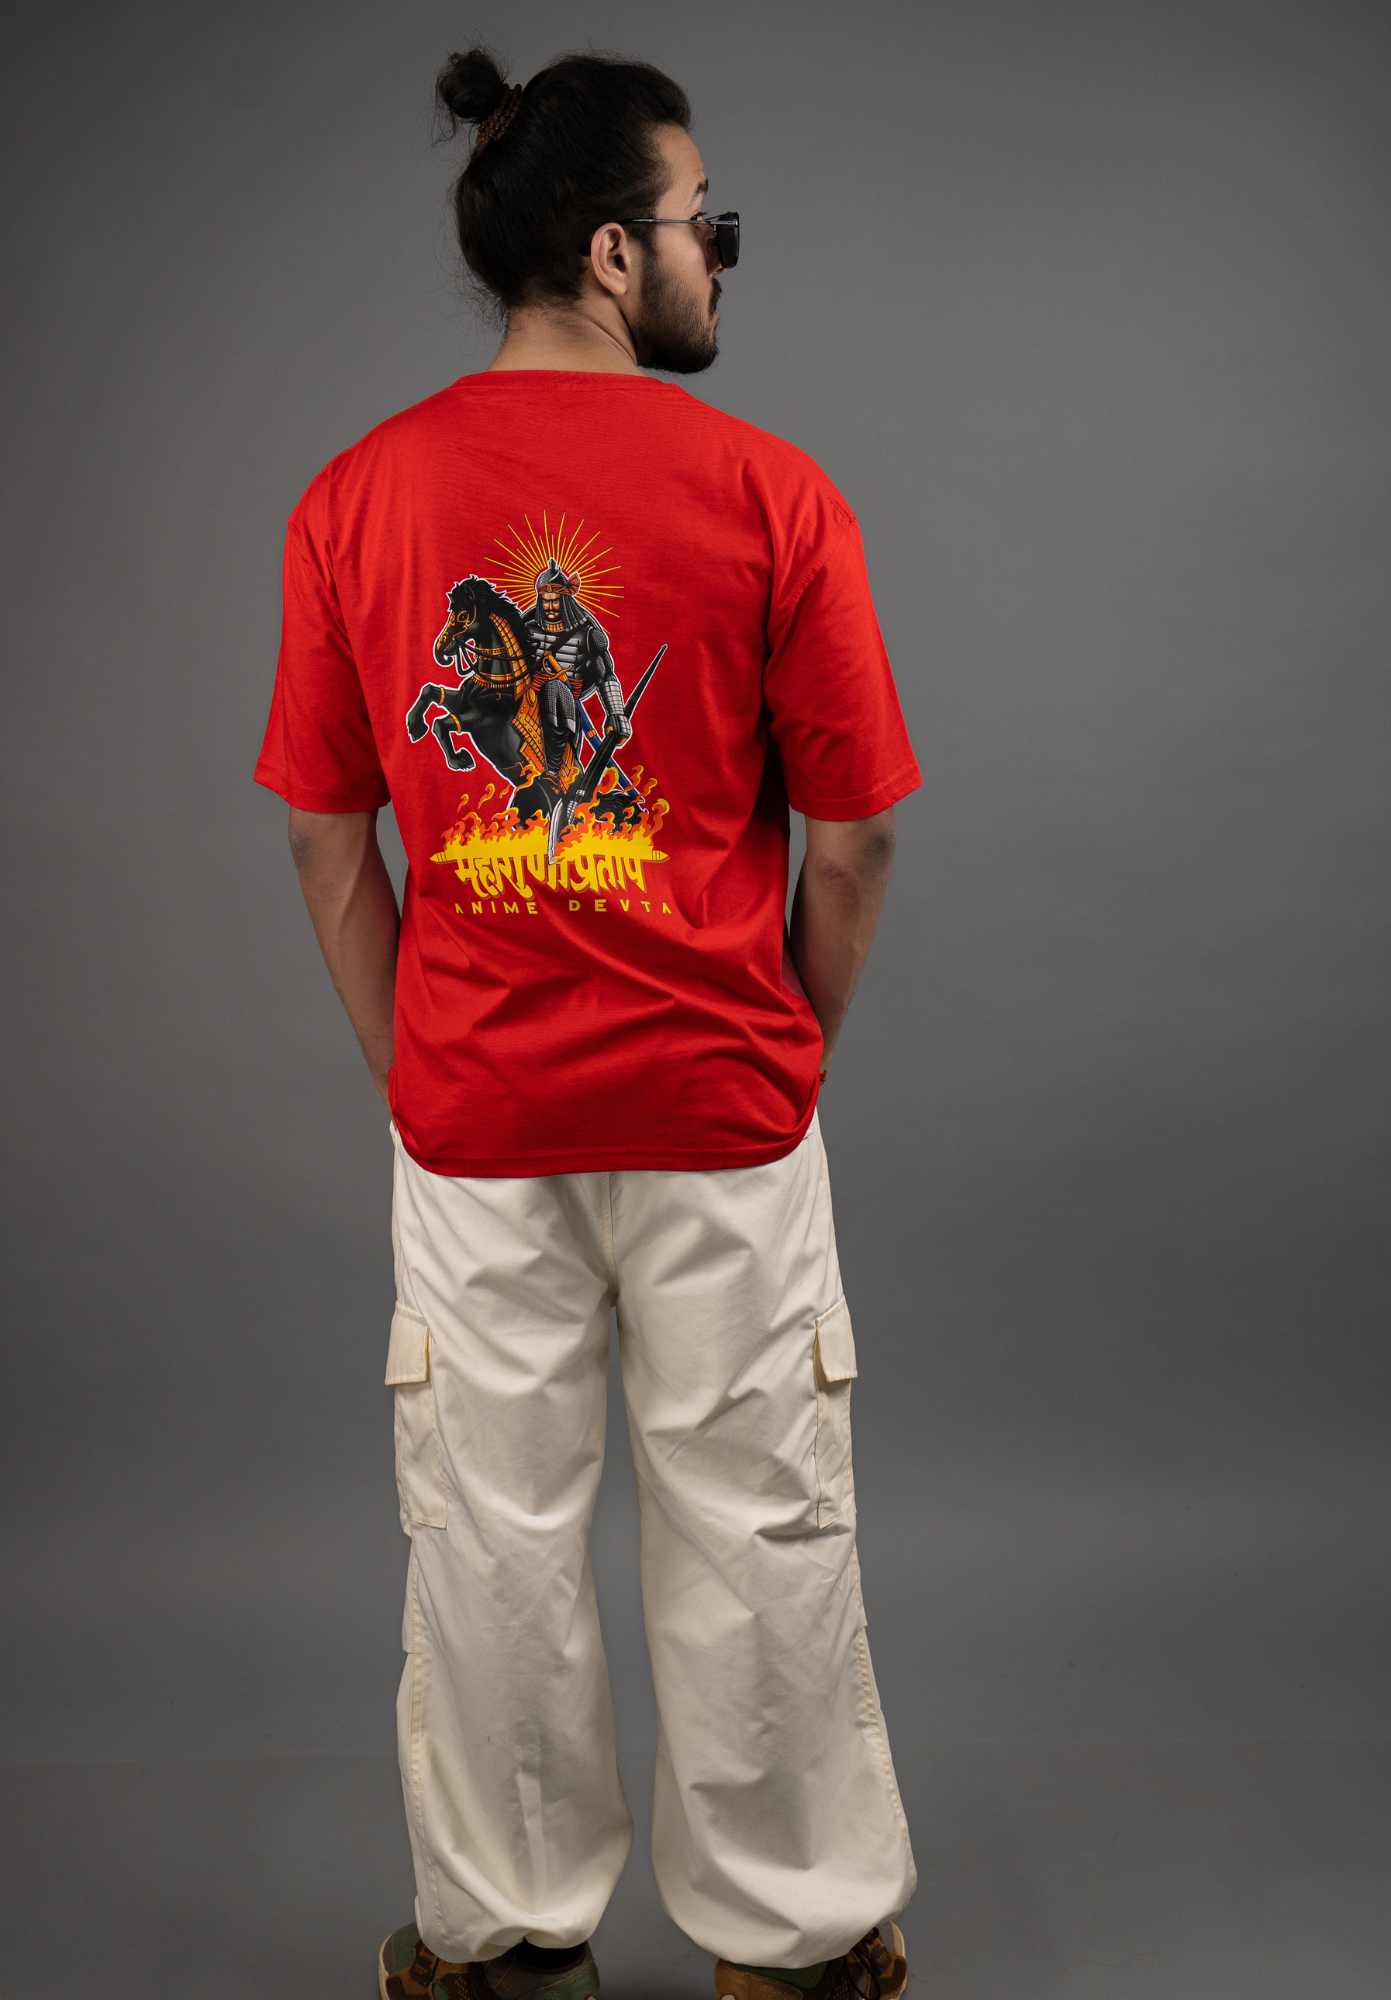 Braveheart Tribute: Maharana Pratap Oversized T-shirt